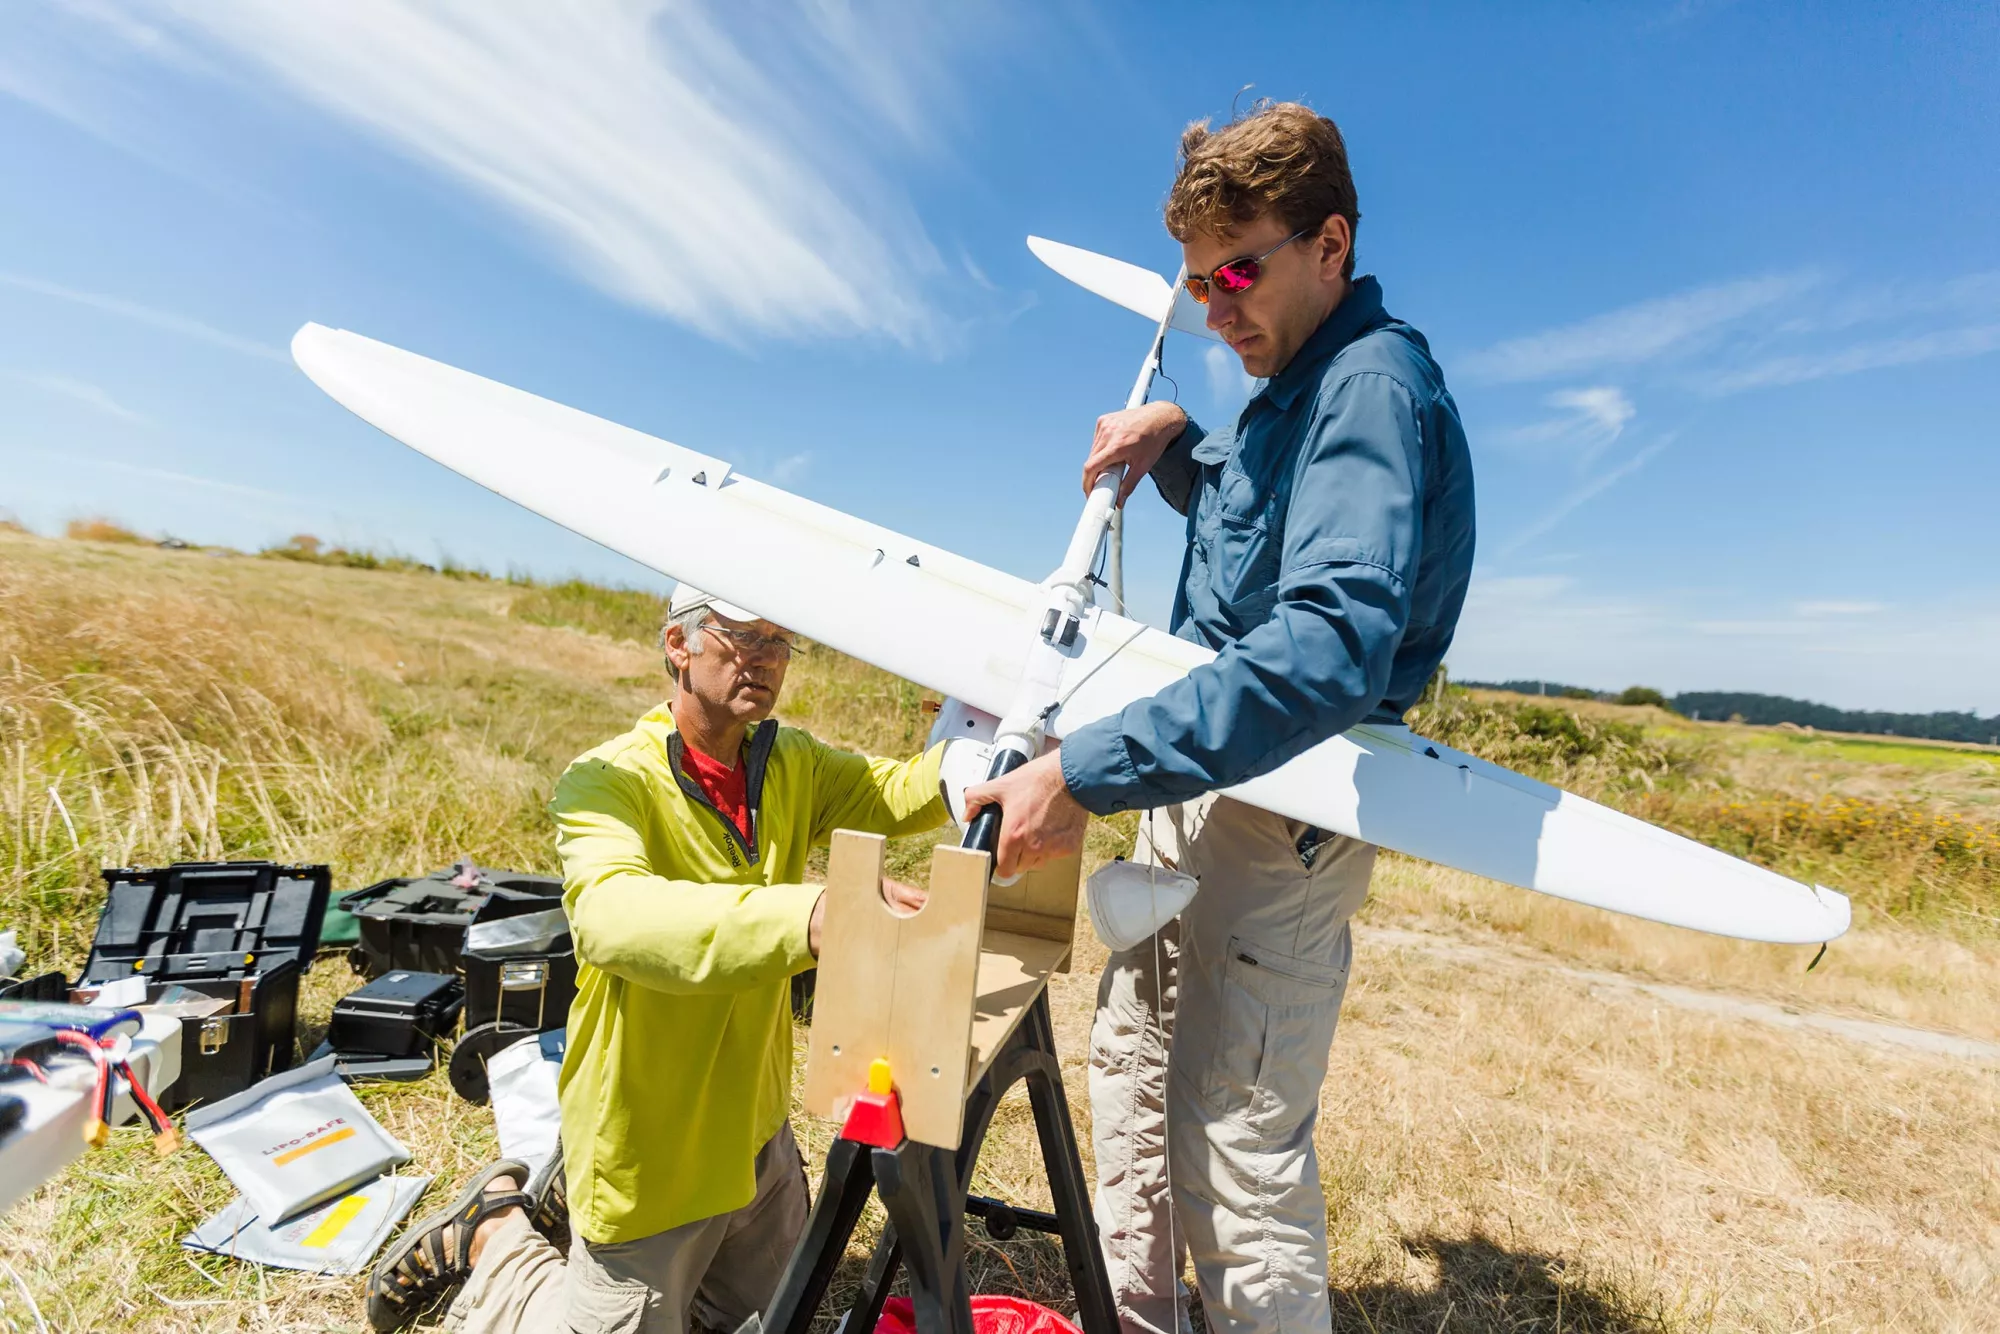 Two men wrangling a model airplane